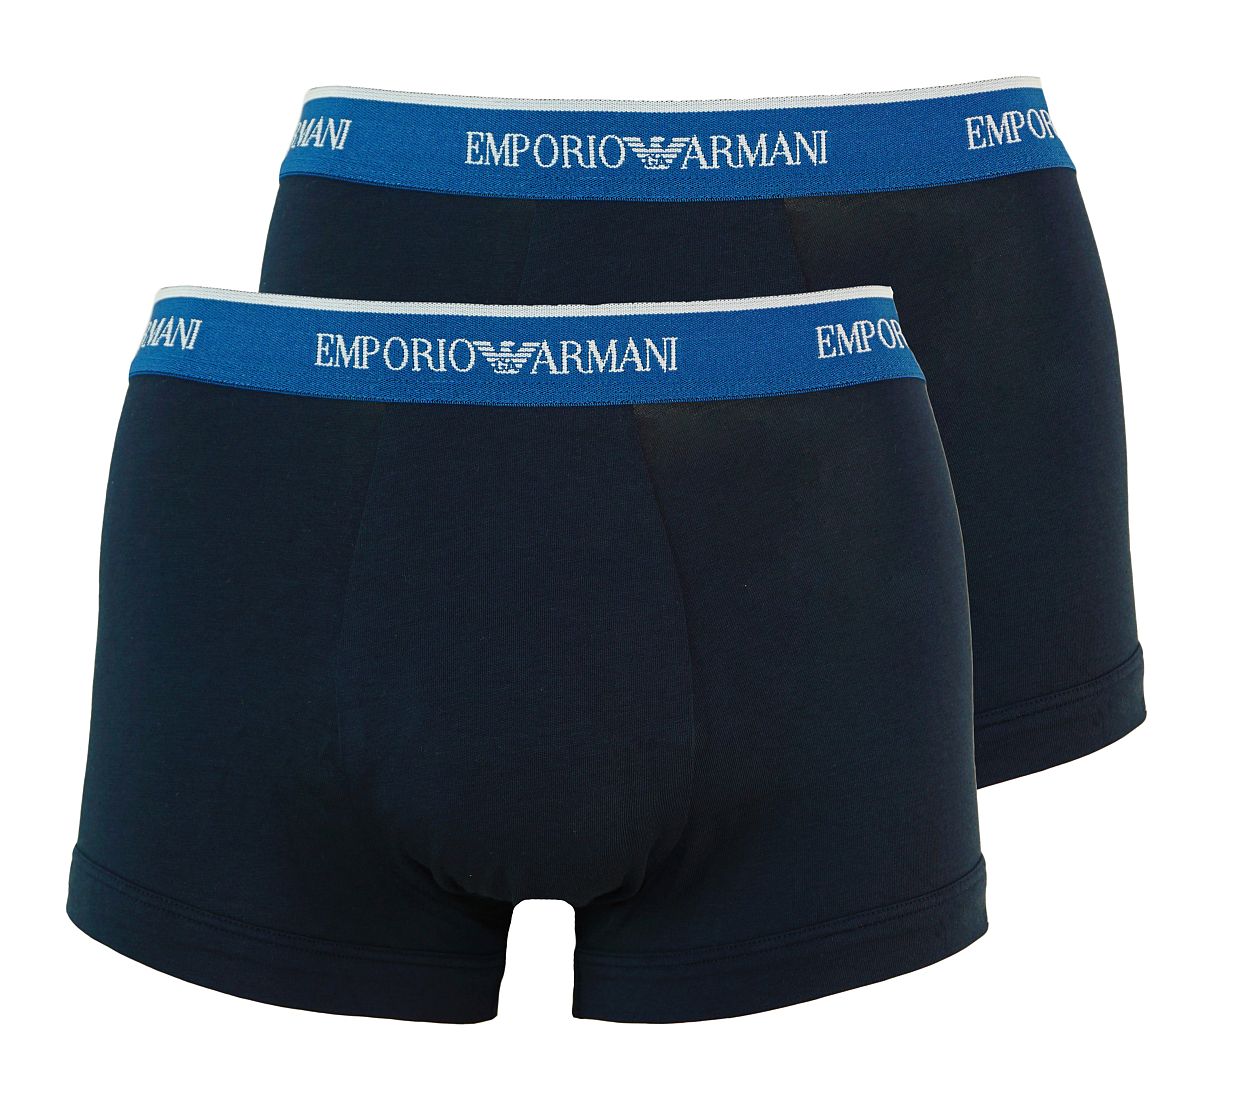 Emporio Armani 2er Pack Trunk Shorts MARINE/MARINE 111210 7P717 27435 WF17-EAT1